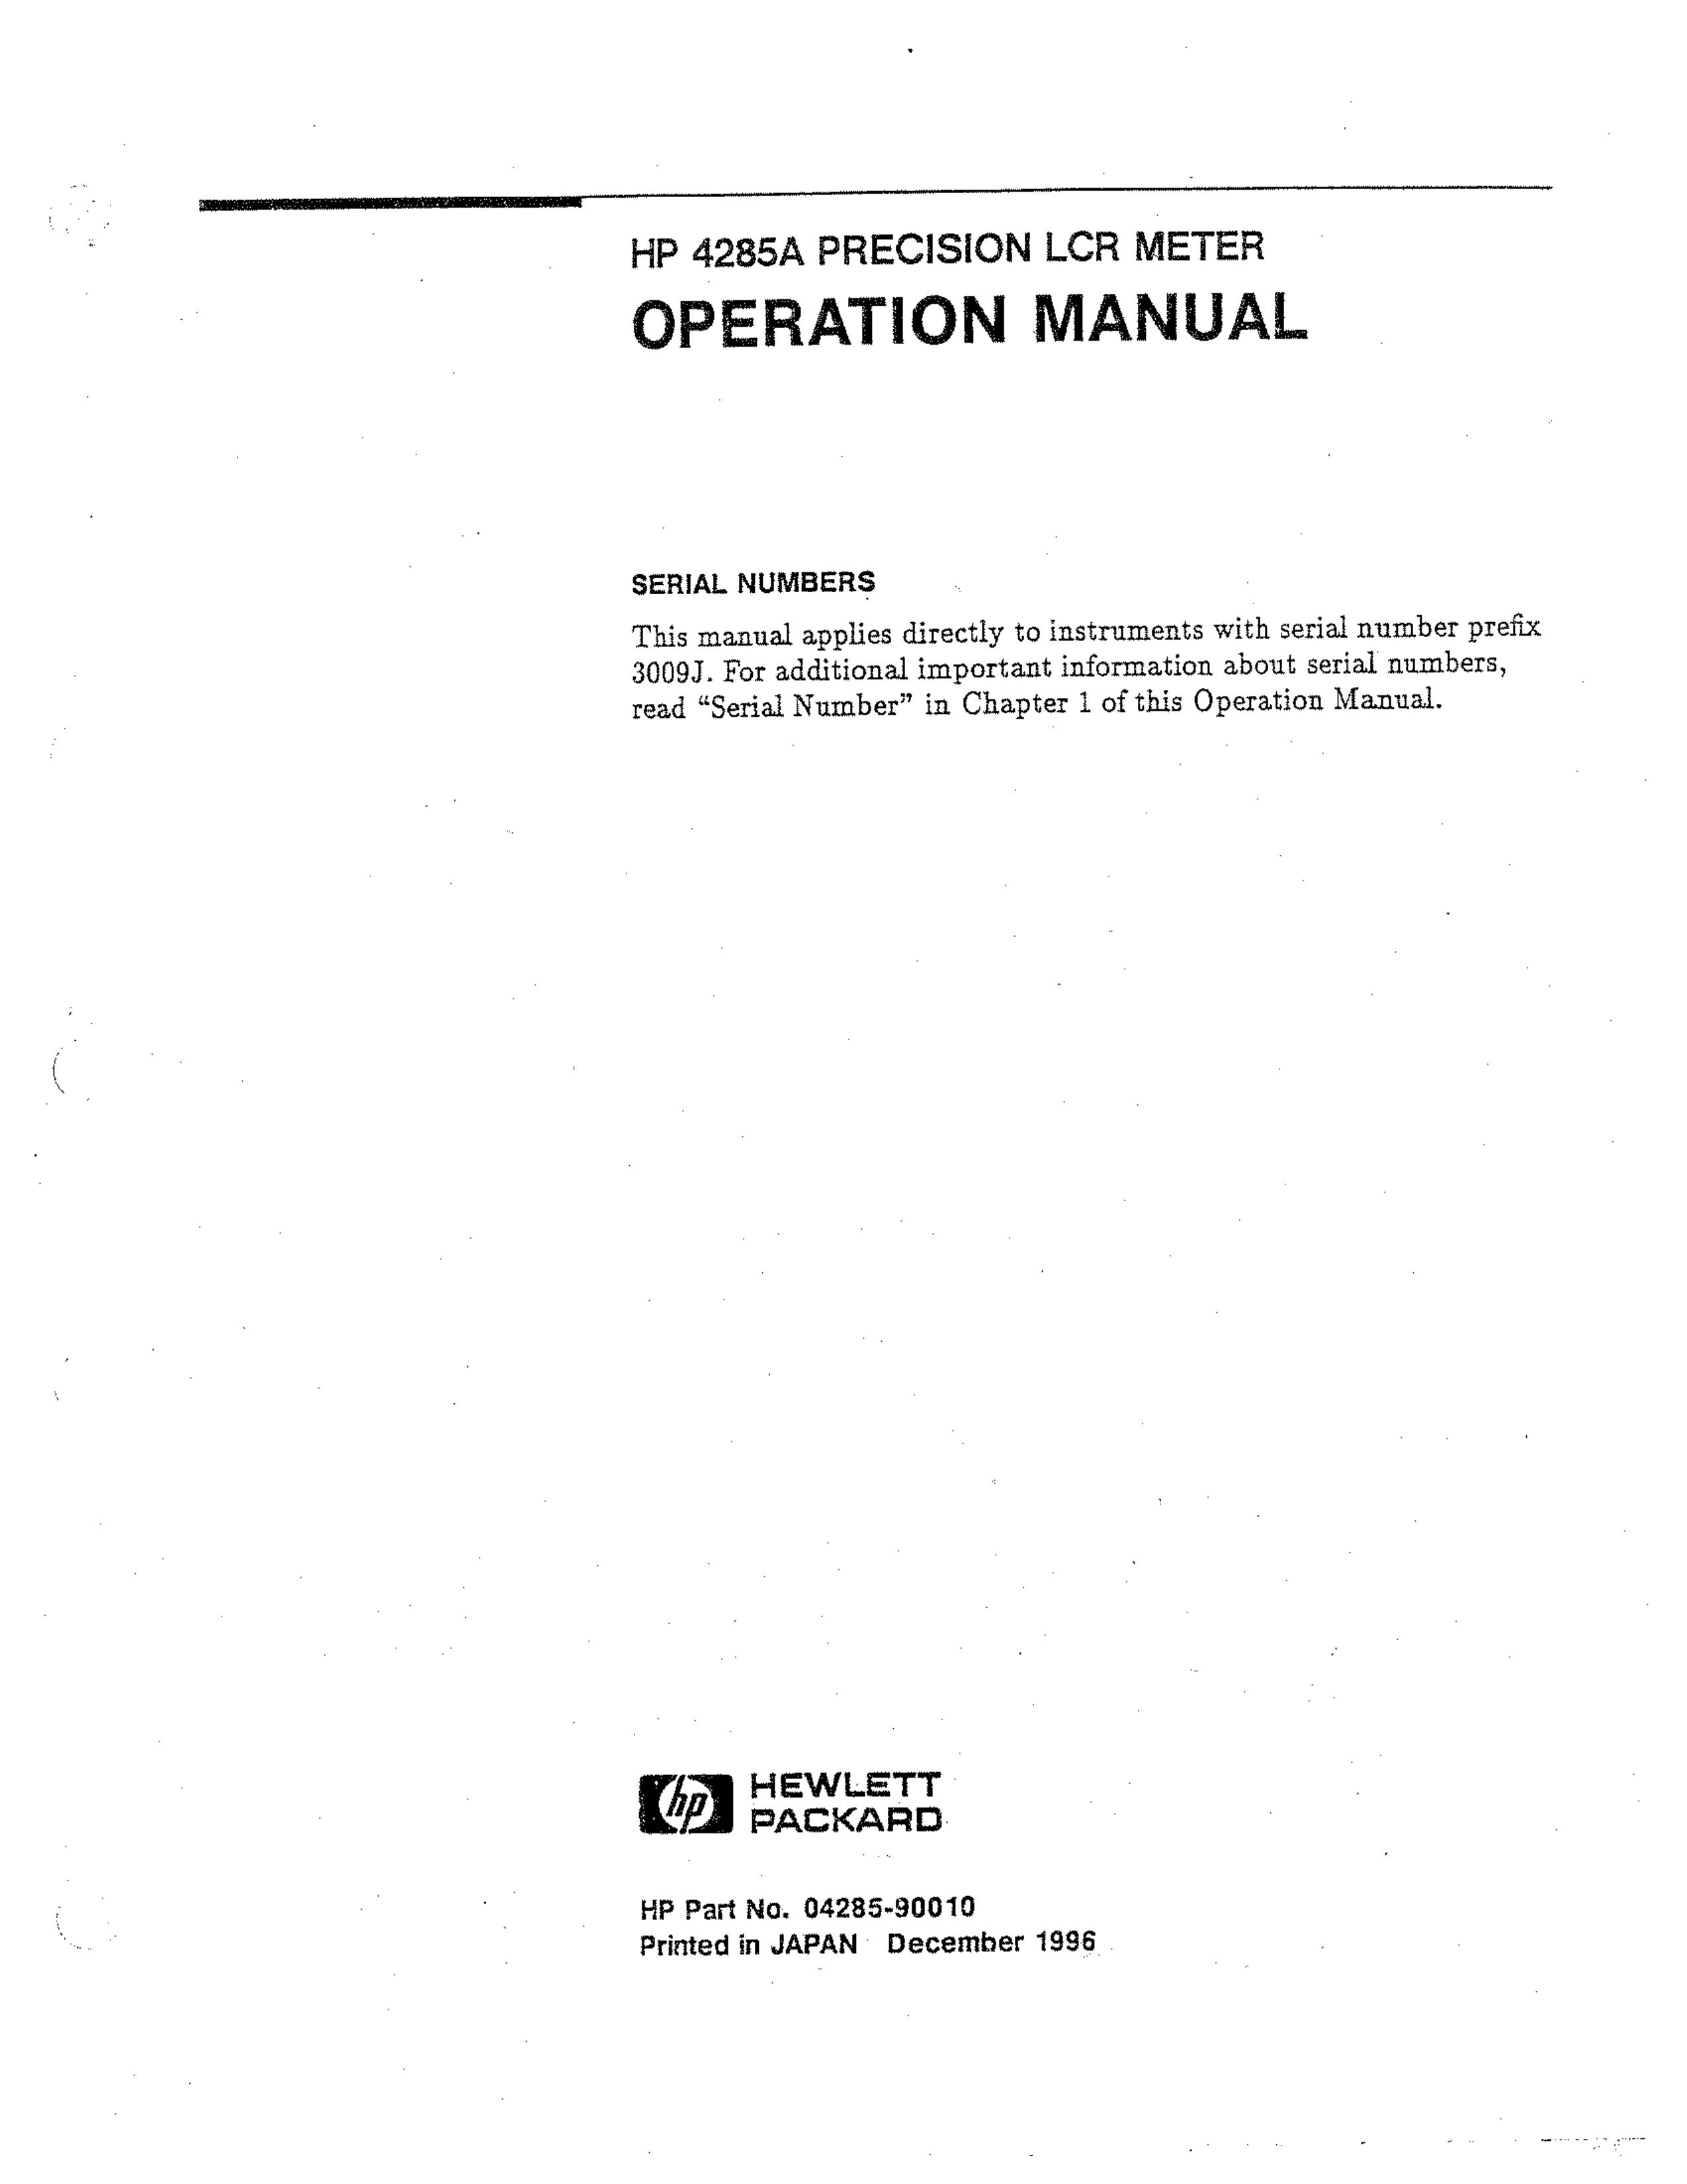 HP (Hewlett-Packard) 04285-90010 Weather Radio User Manual